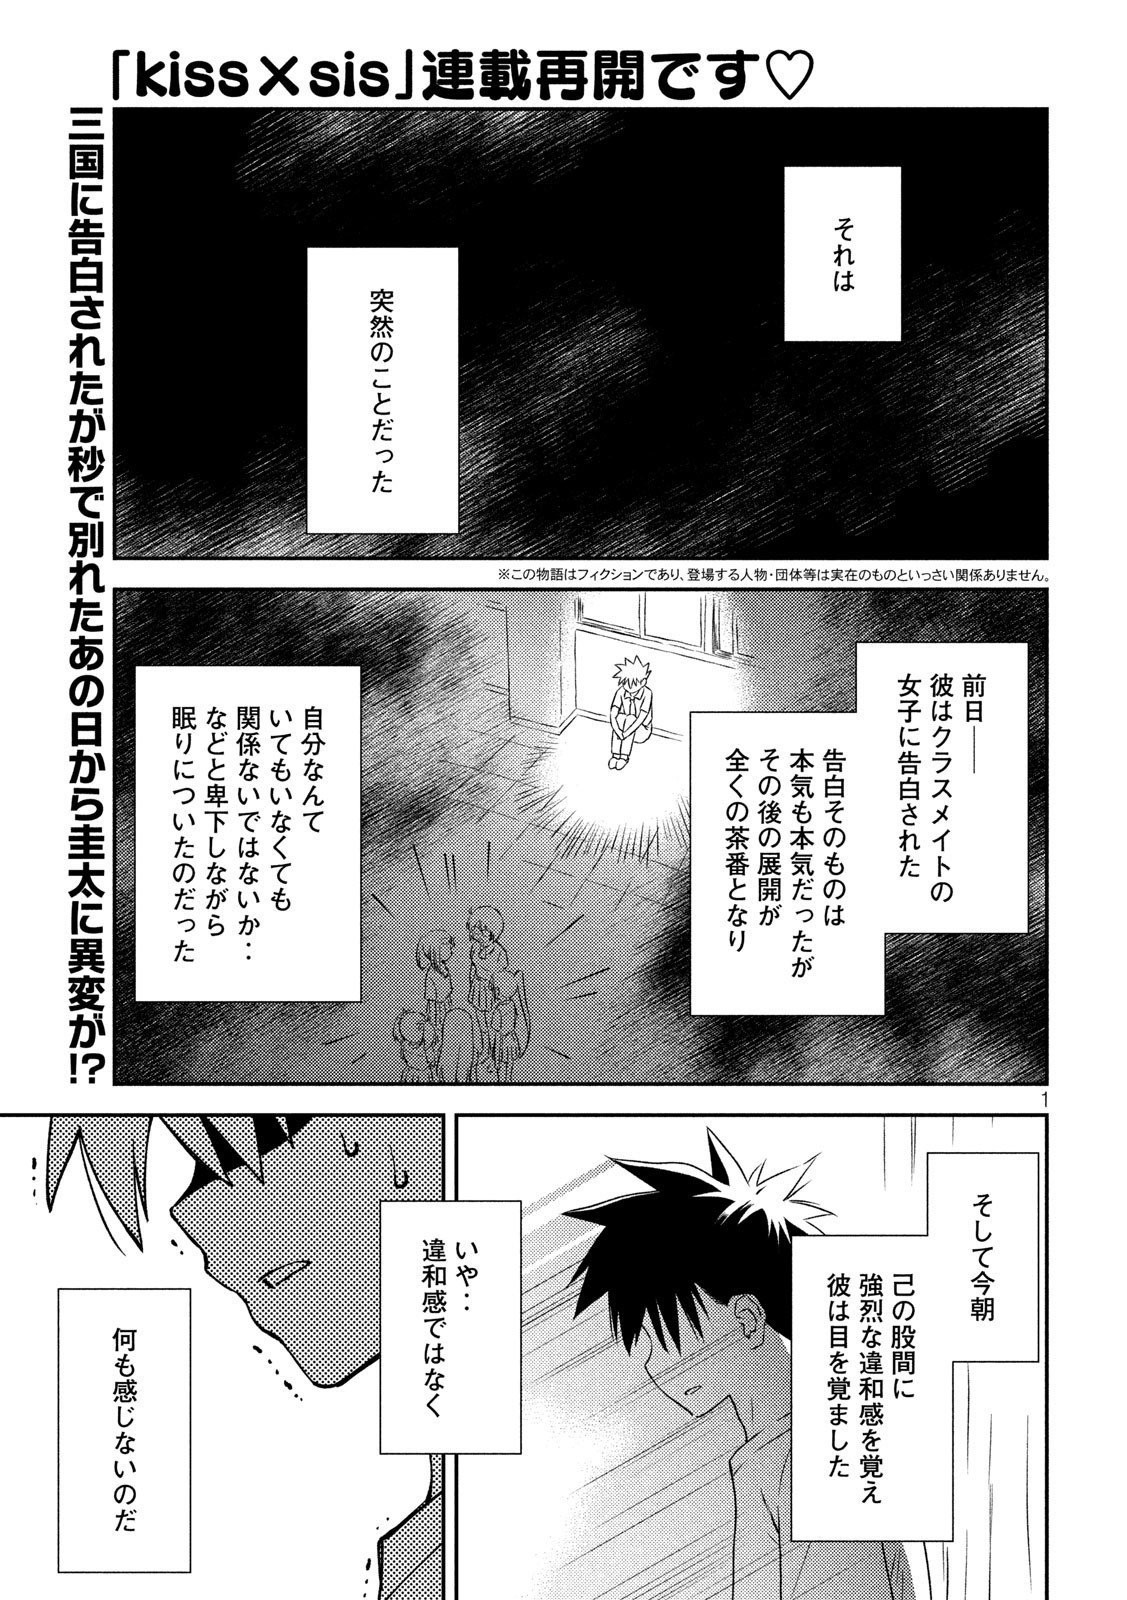 Kiss X Sis Chapter 140 Page 1 Raw Manga 生漫画